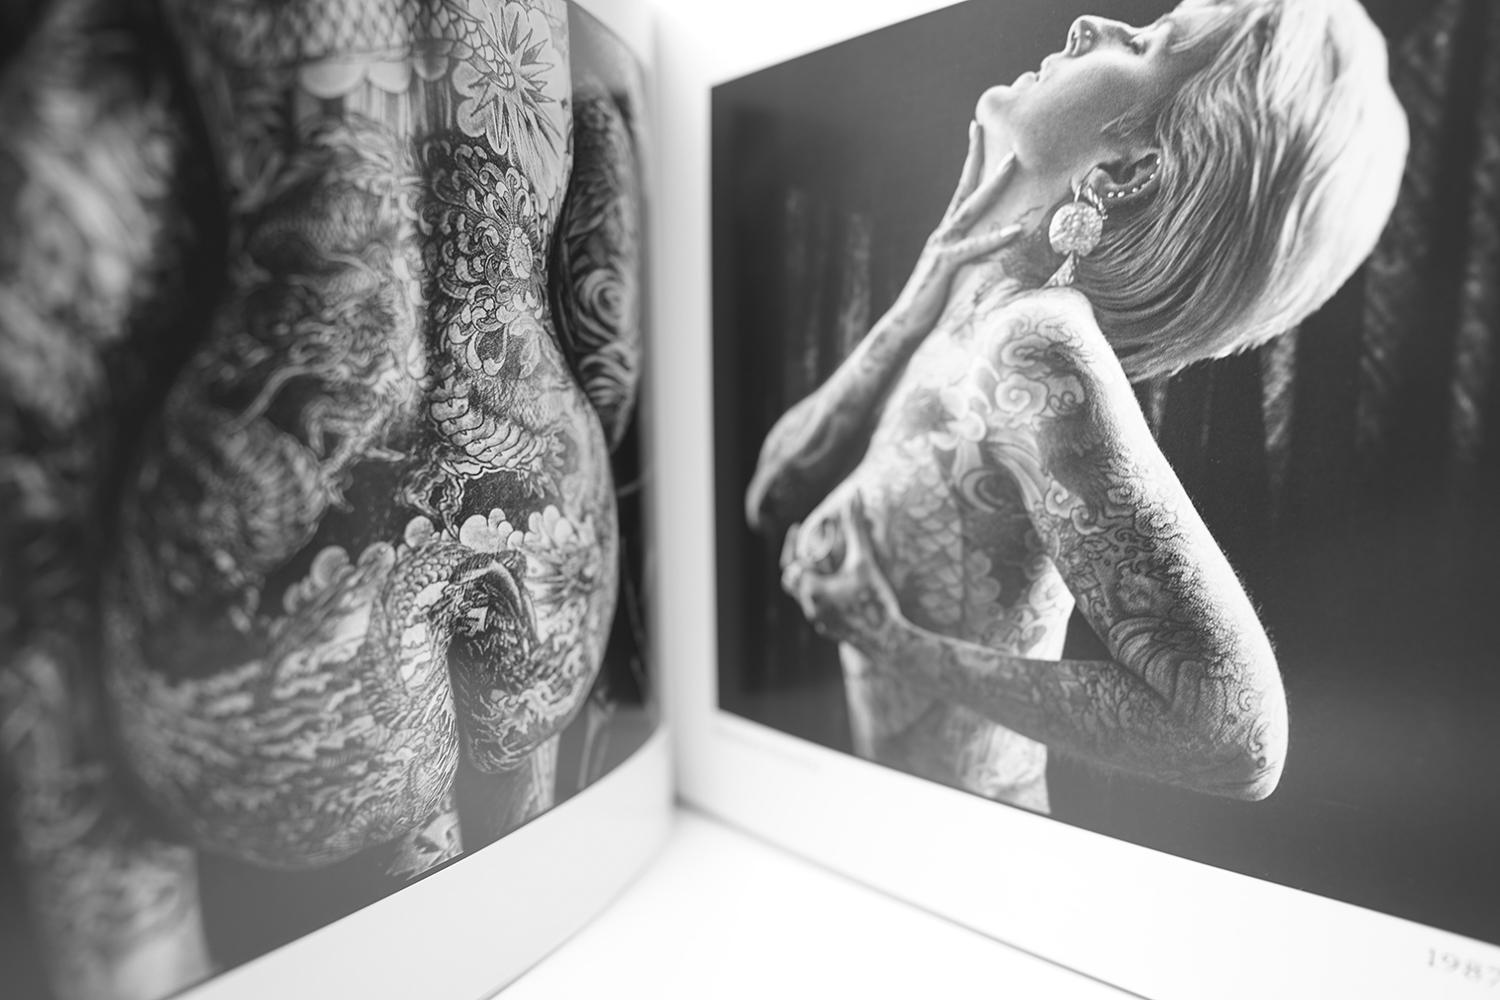 Tattooed women, photo copyright by Dianne mansfield